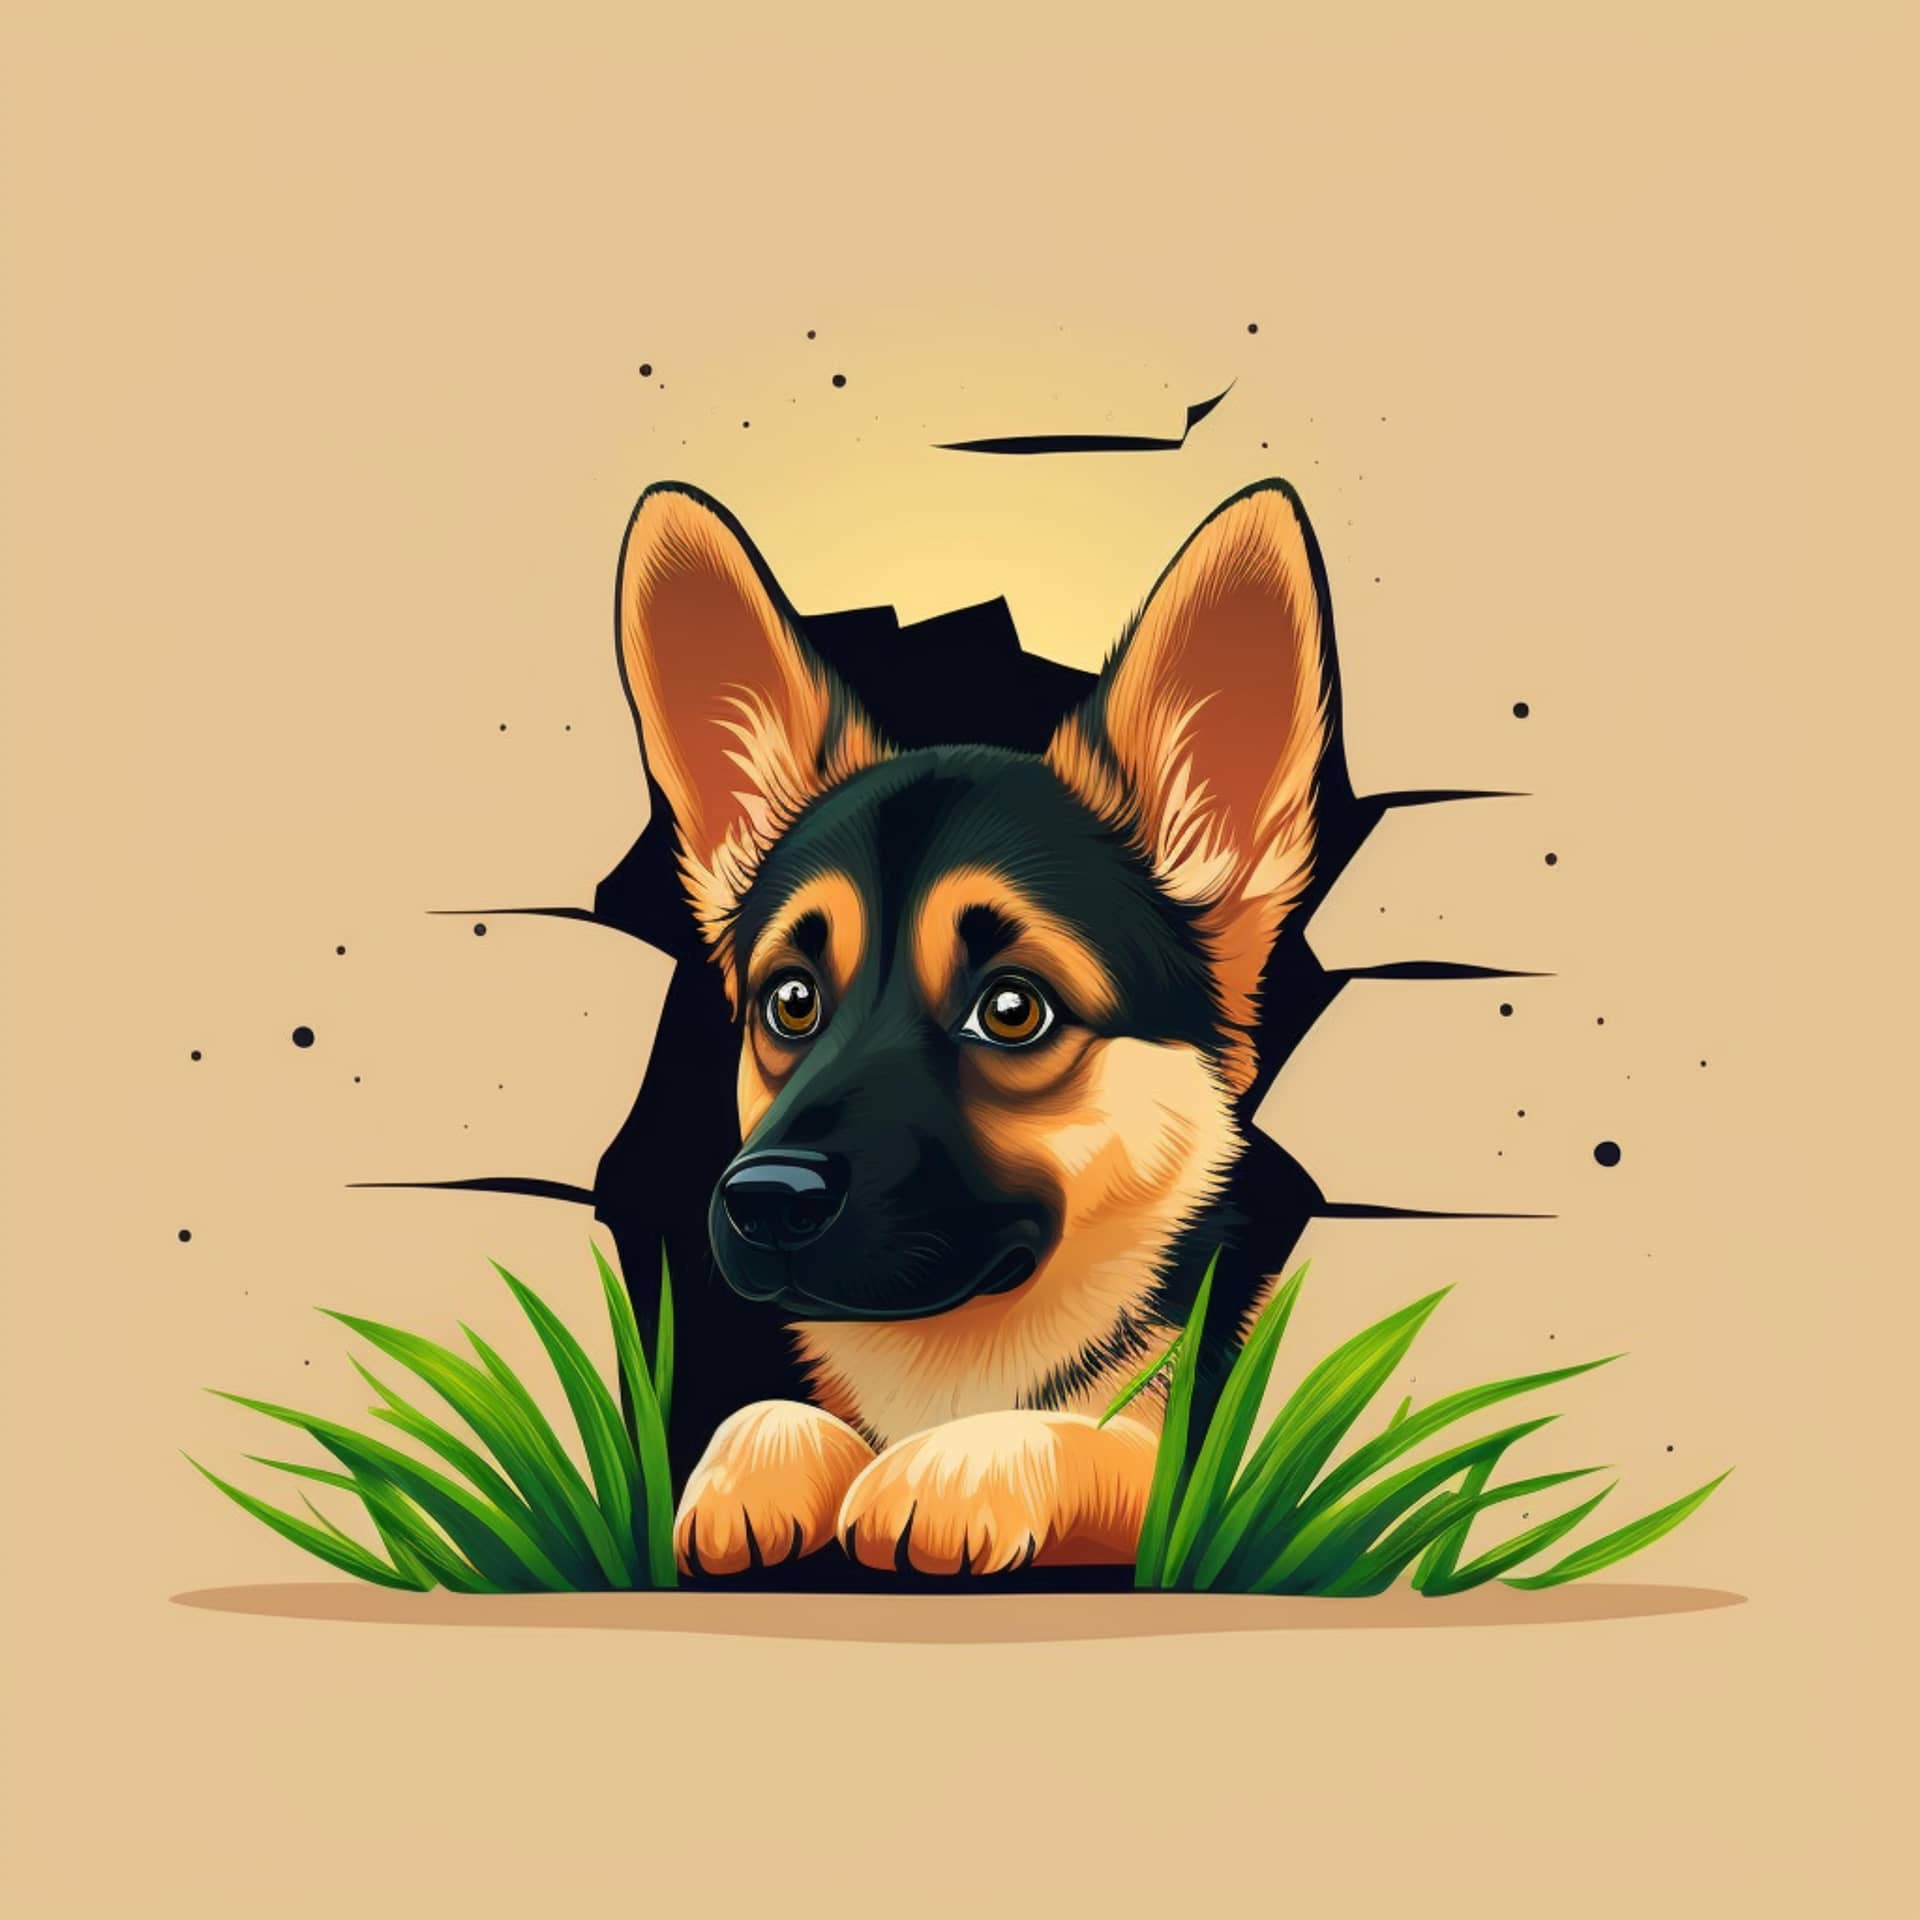 Cute dog cartoon icon illustration moody image